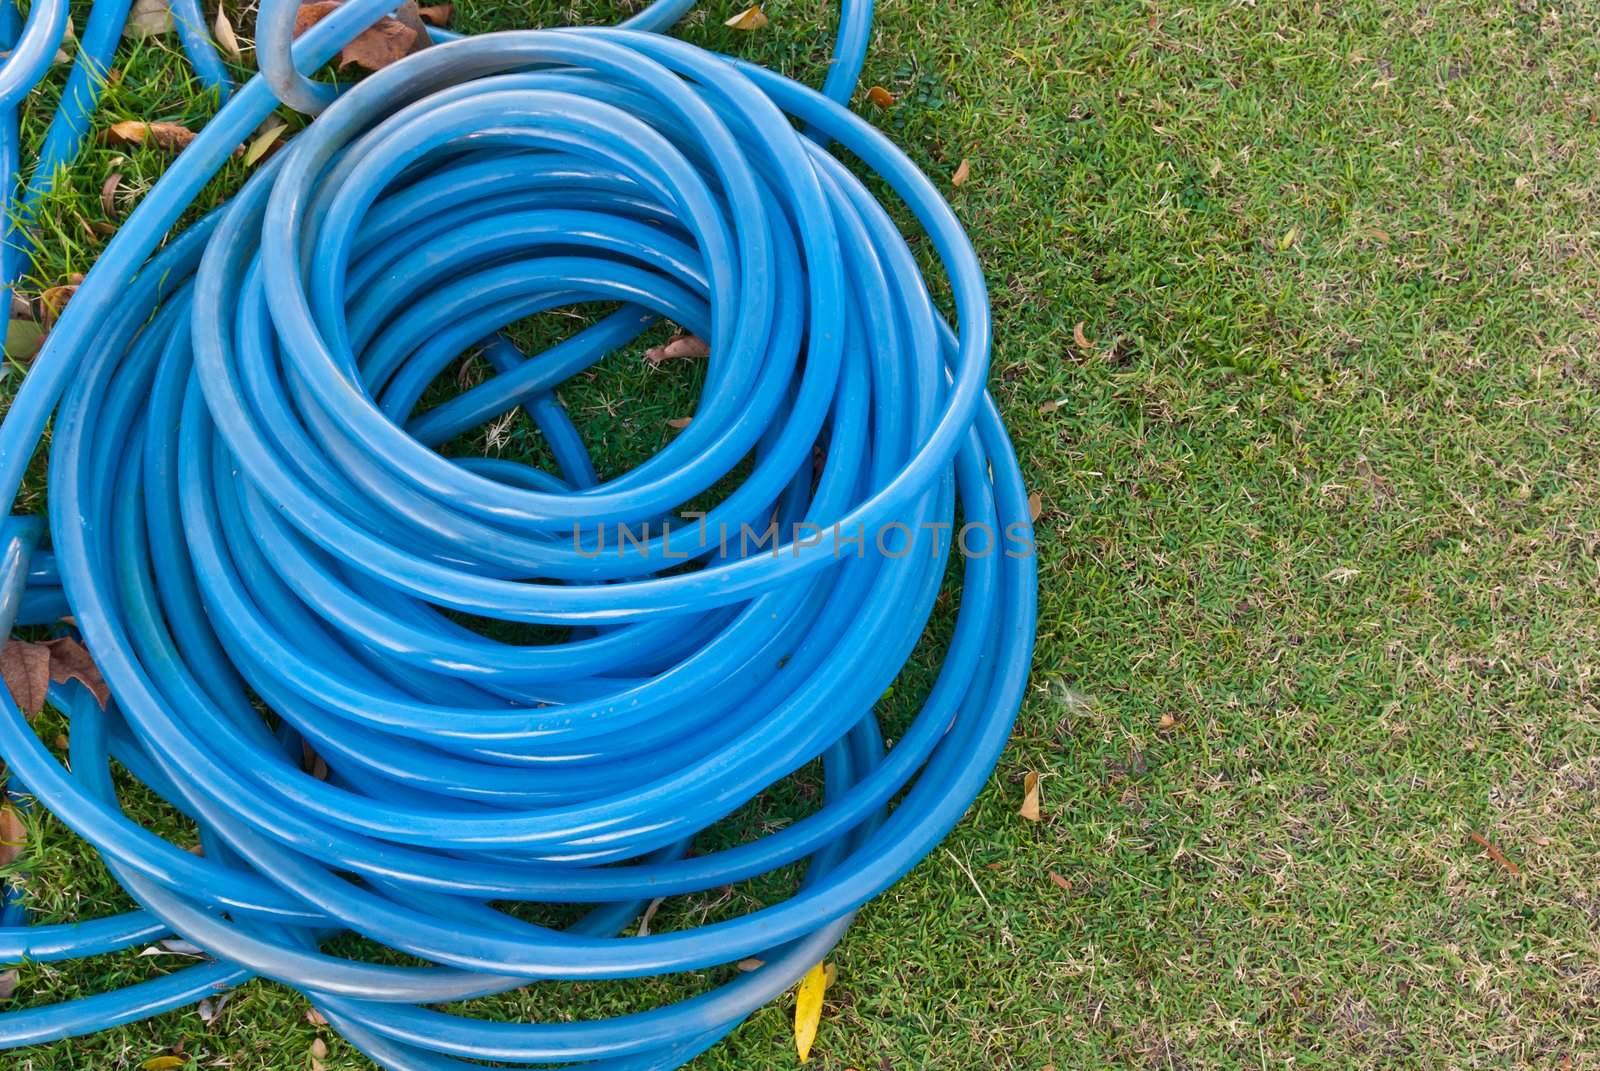 Blue garden water hose stack together by sasilsolutions